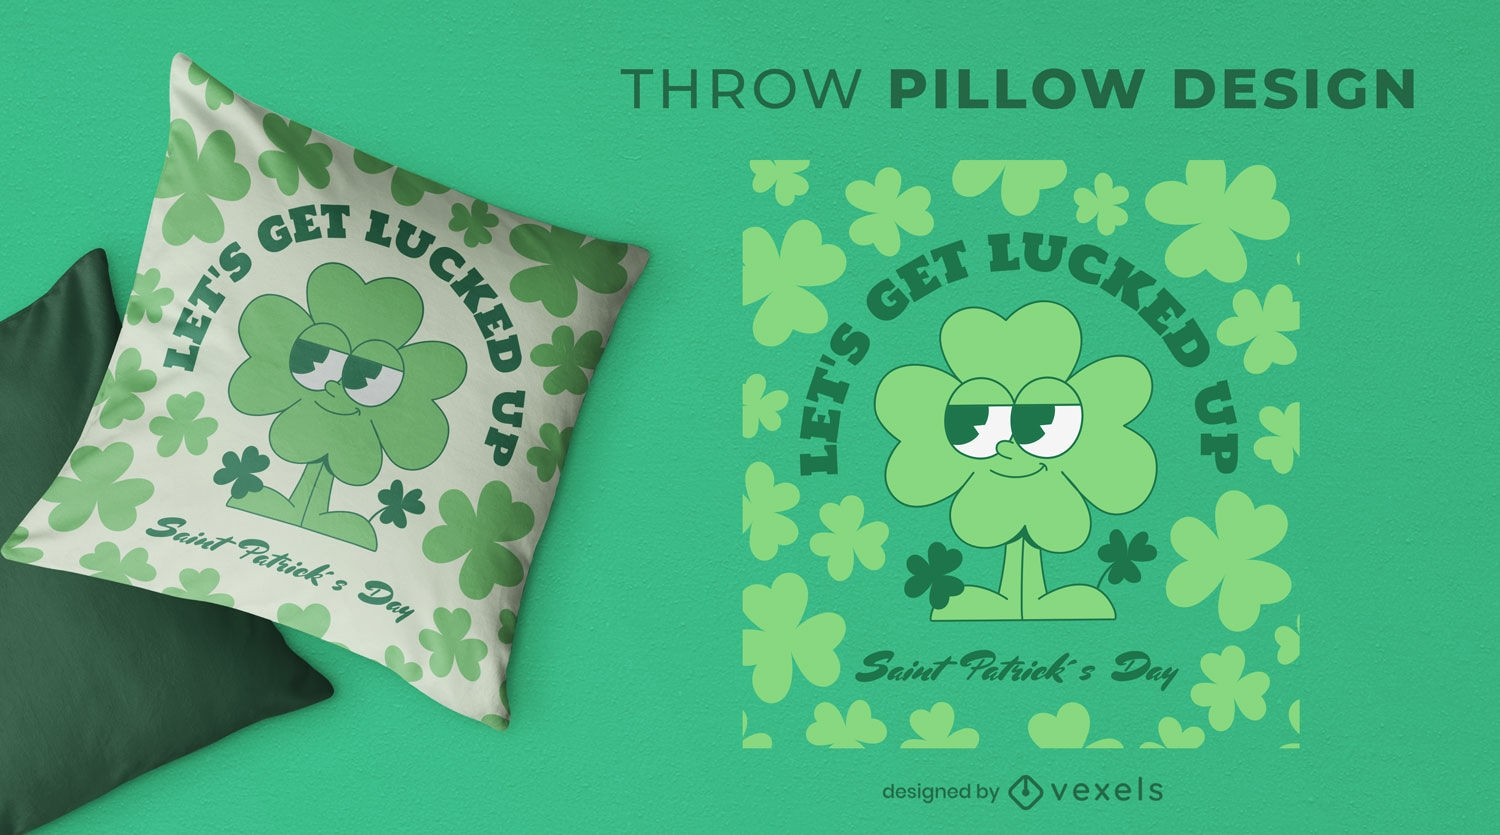 St Patrick retro cartoon throw pillow design